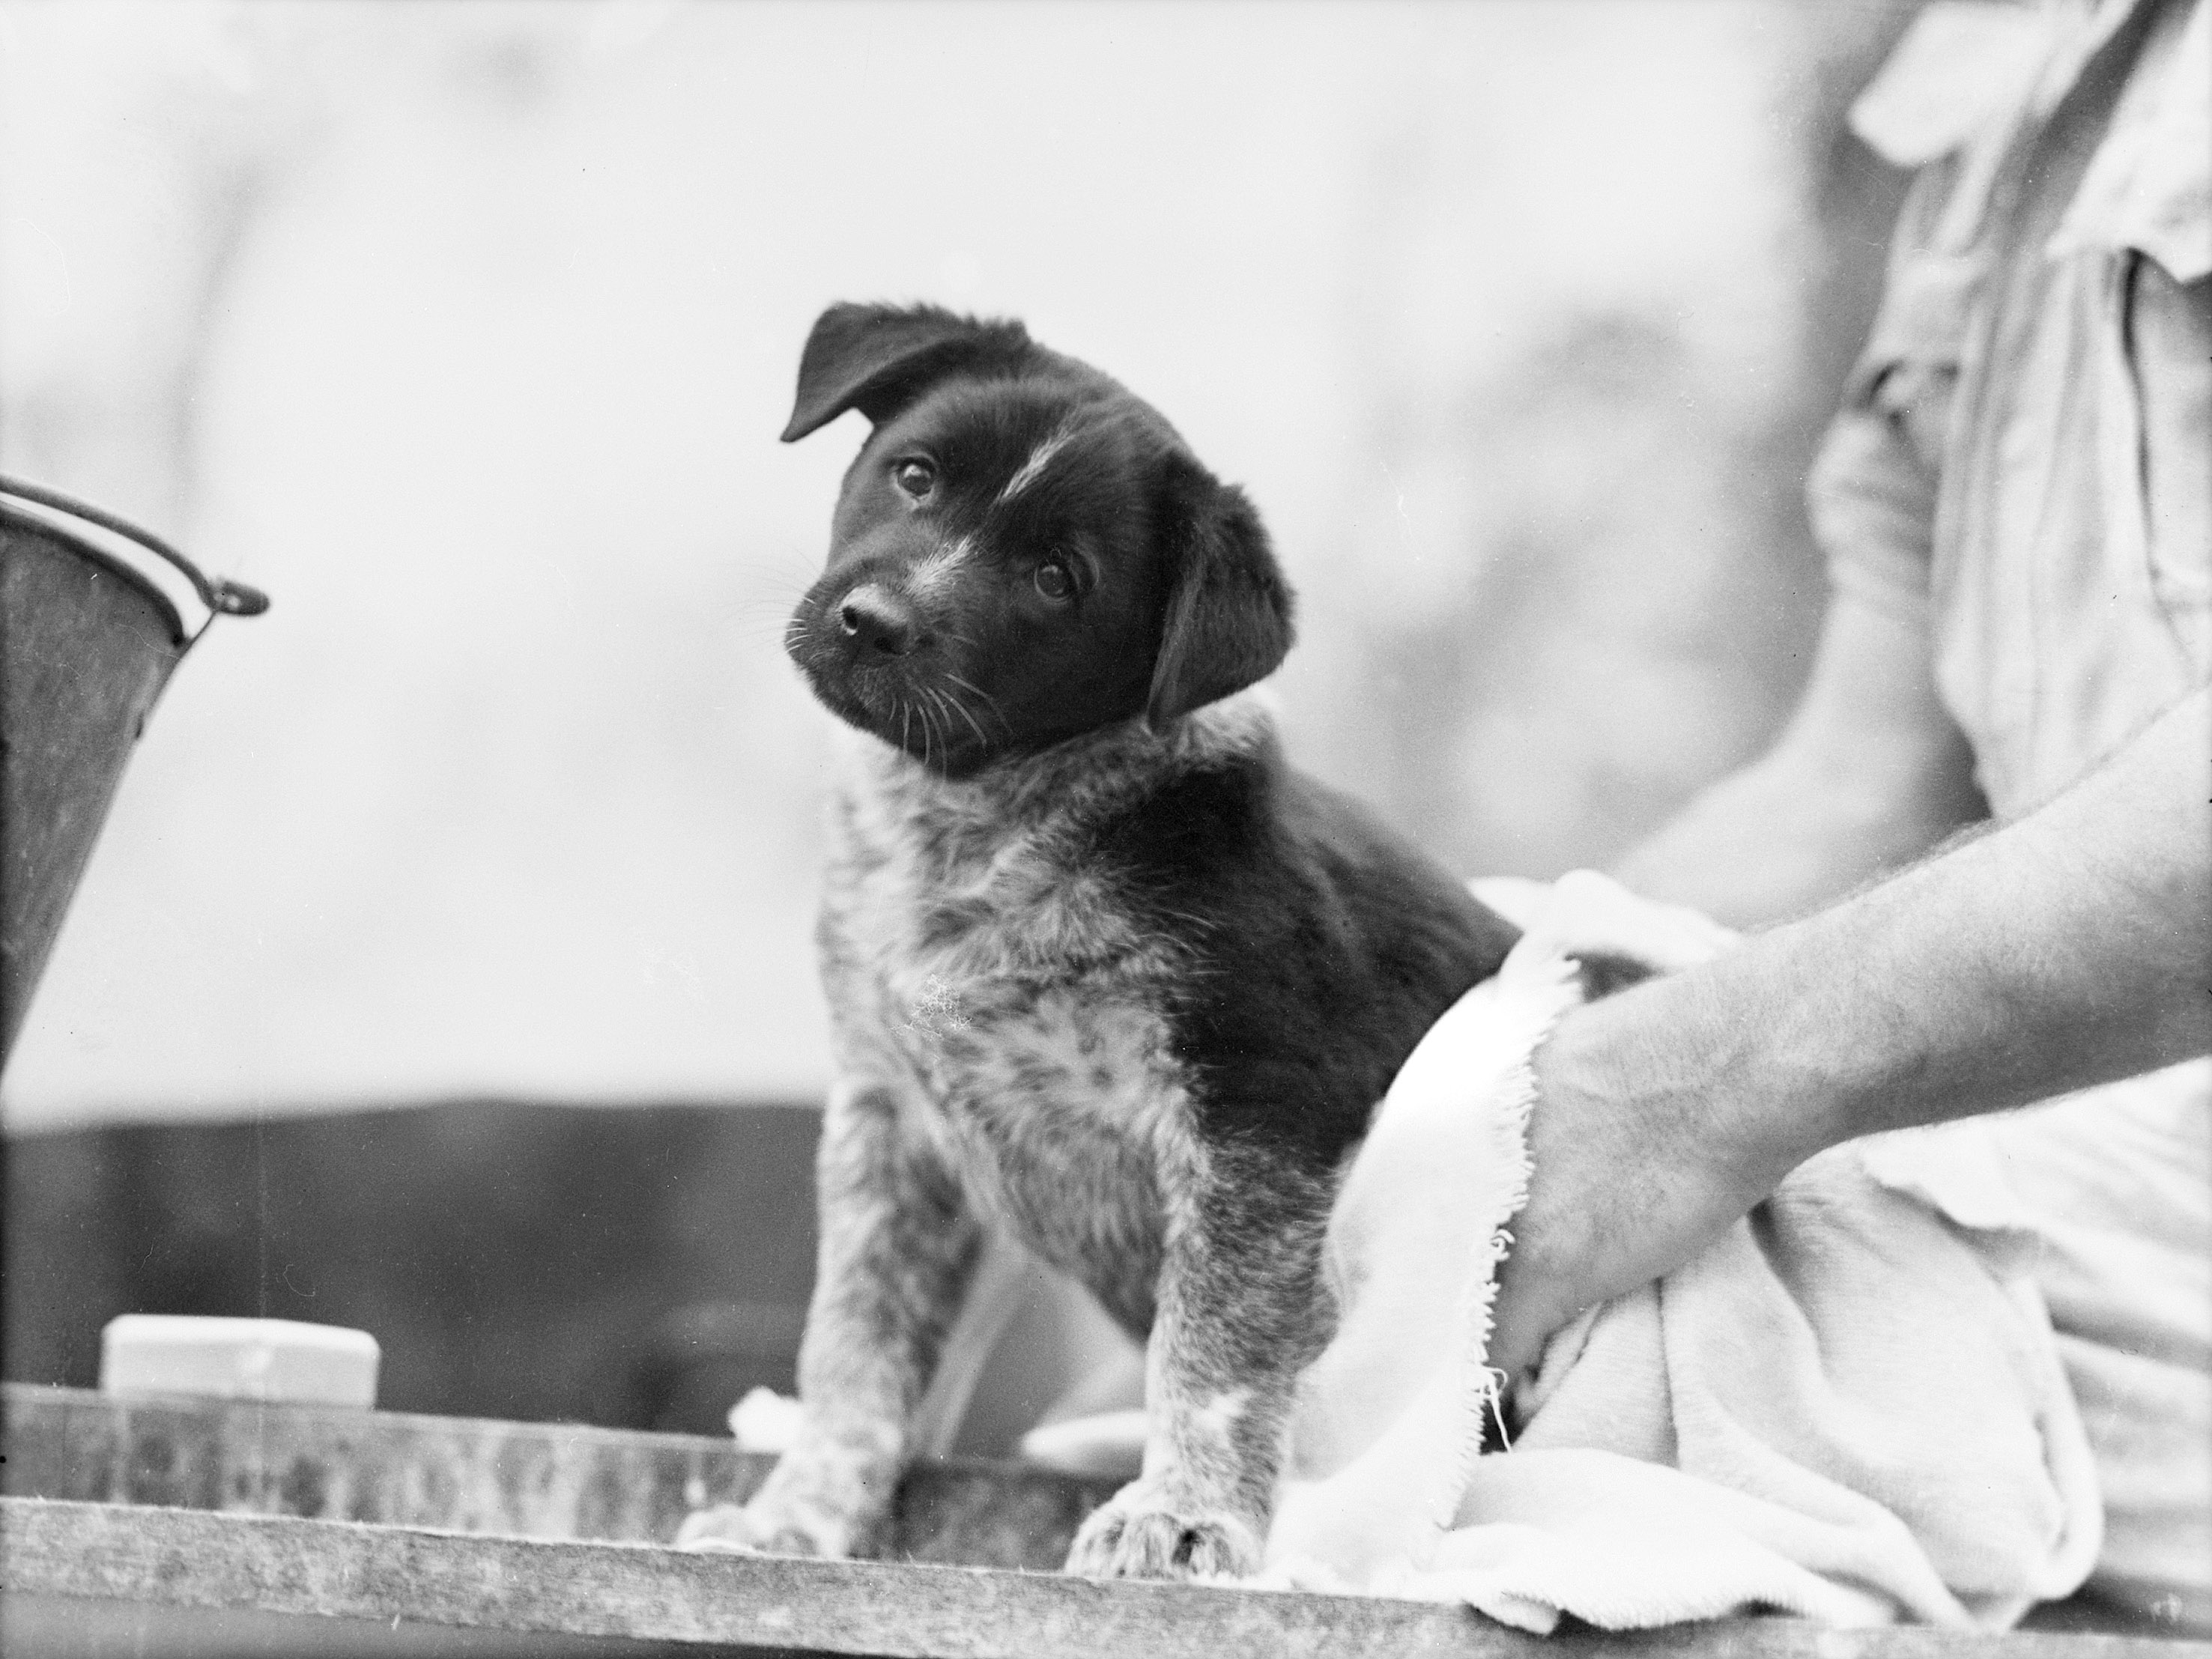 The mascot pup after a bath 1943 (3526345203)